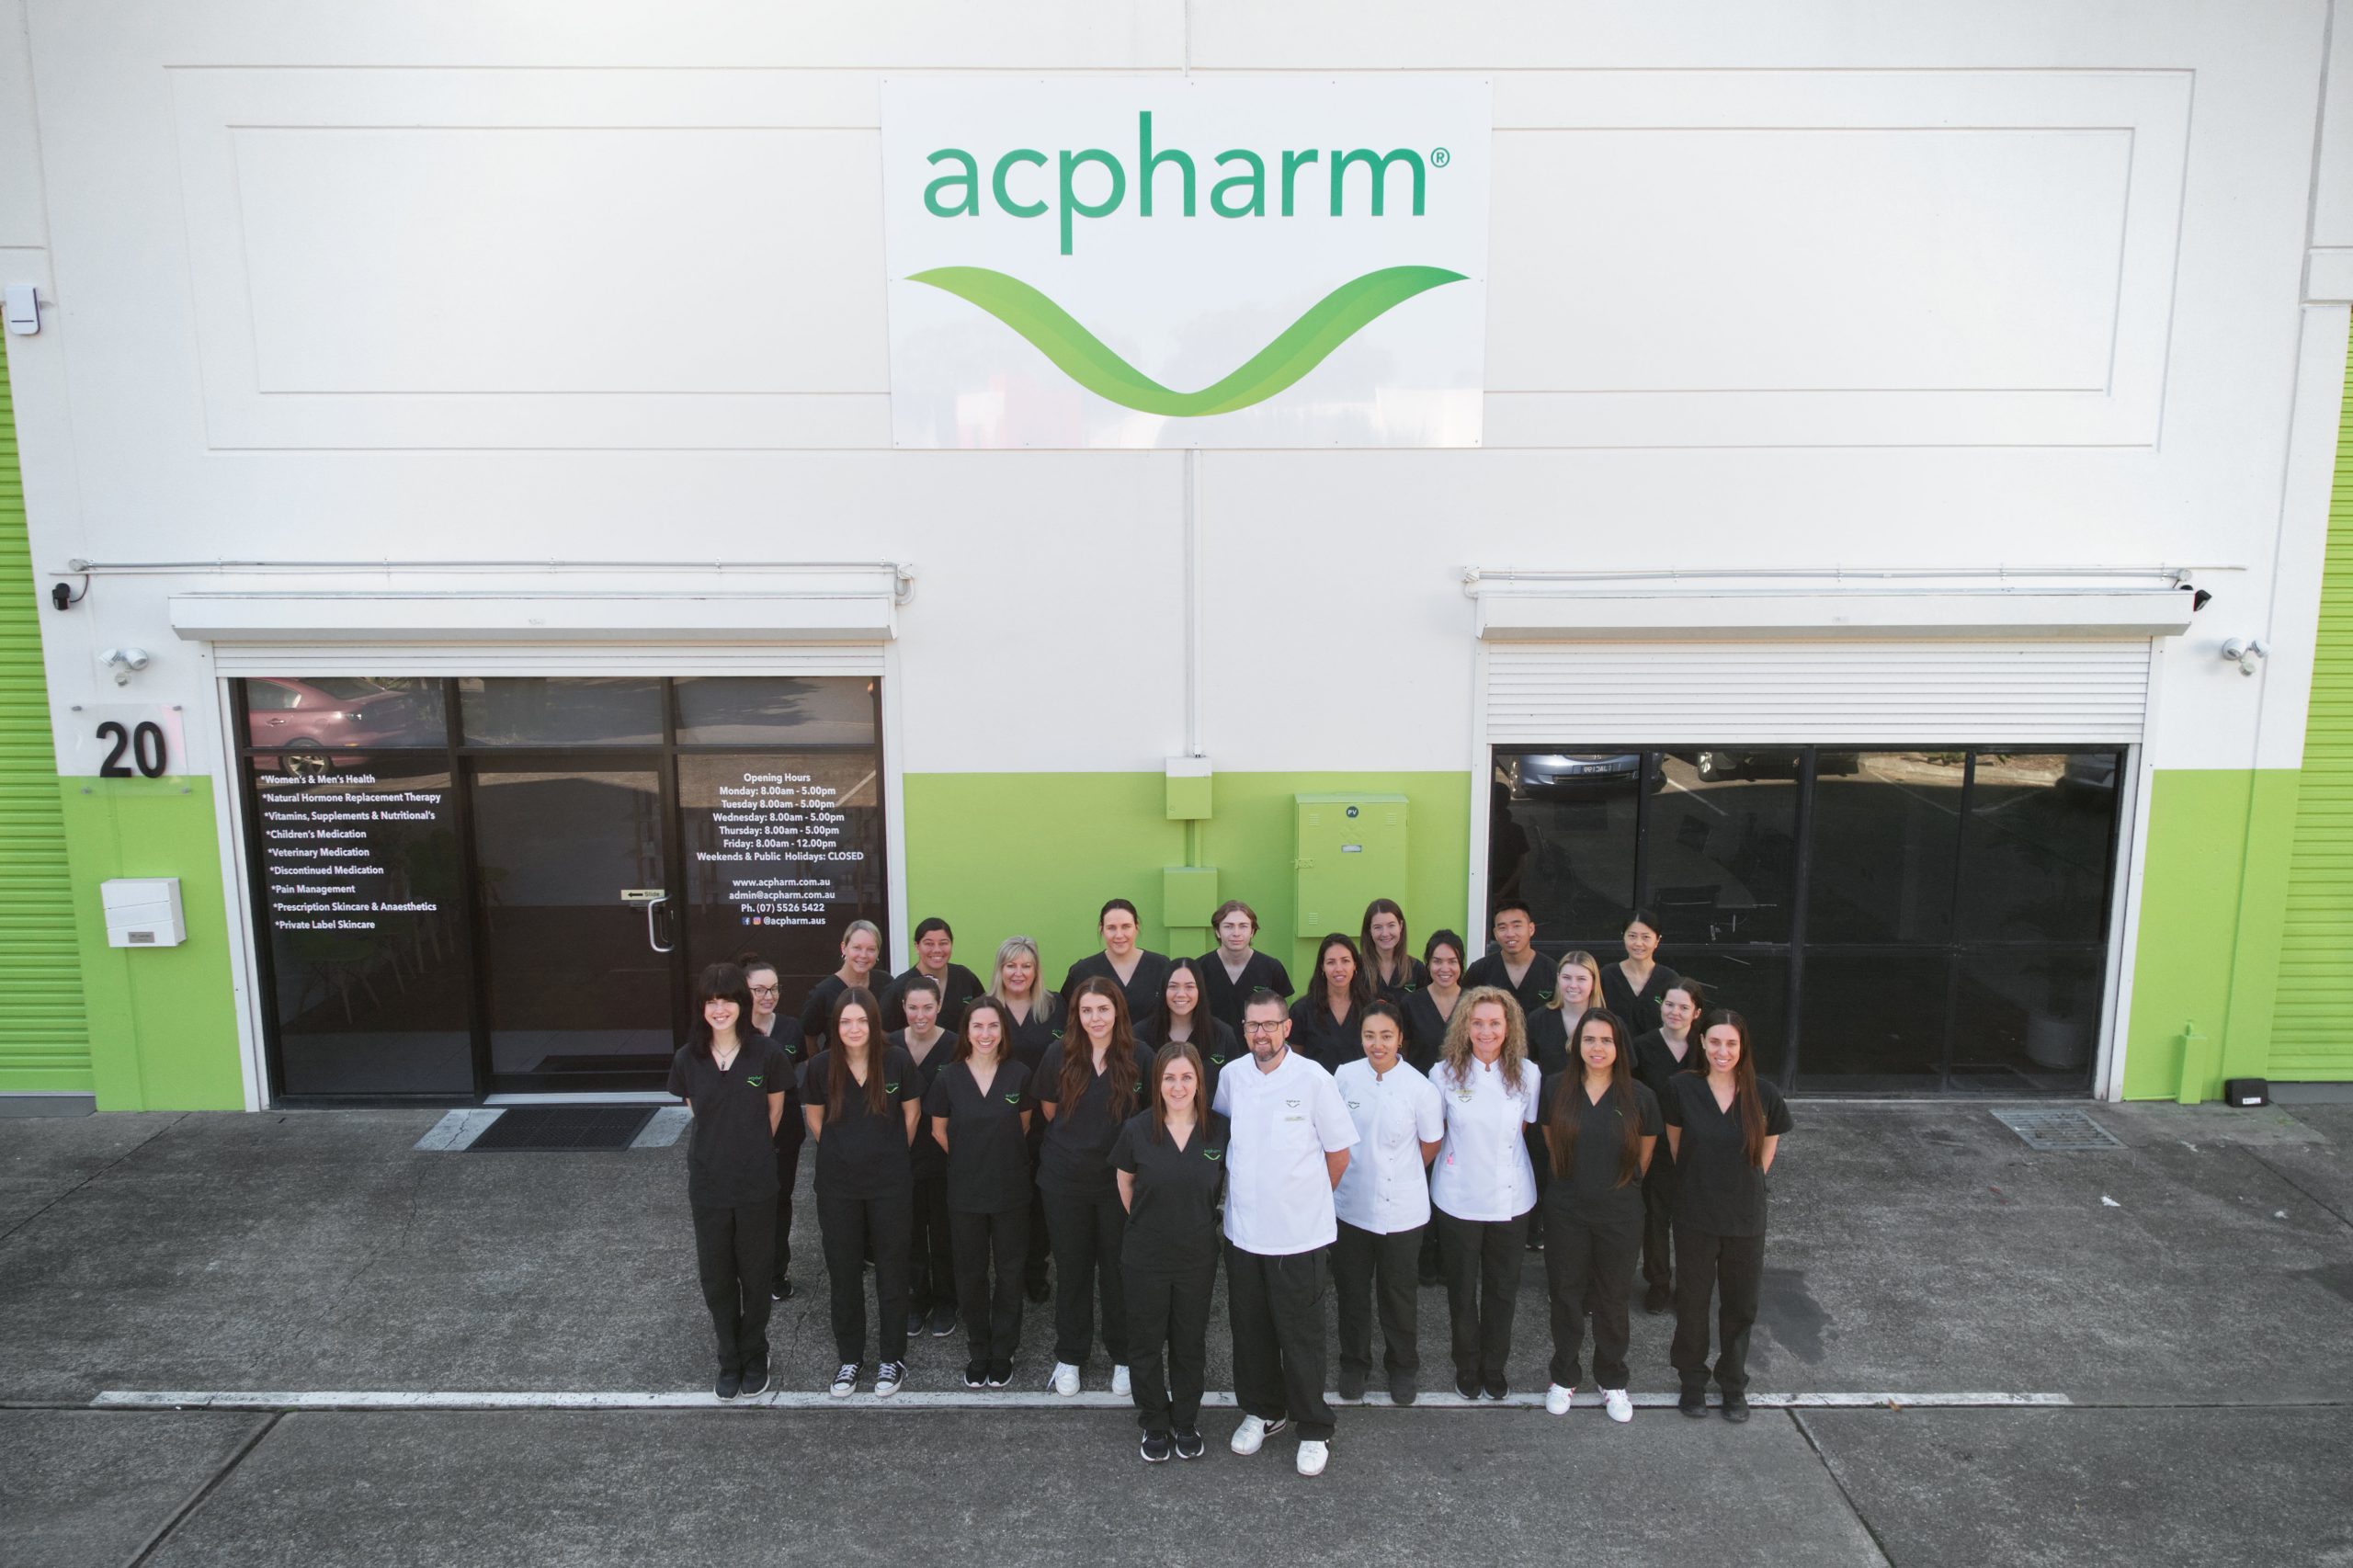 ACPHARM - Pharmacy